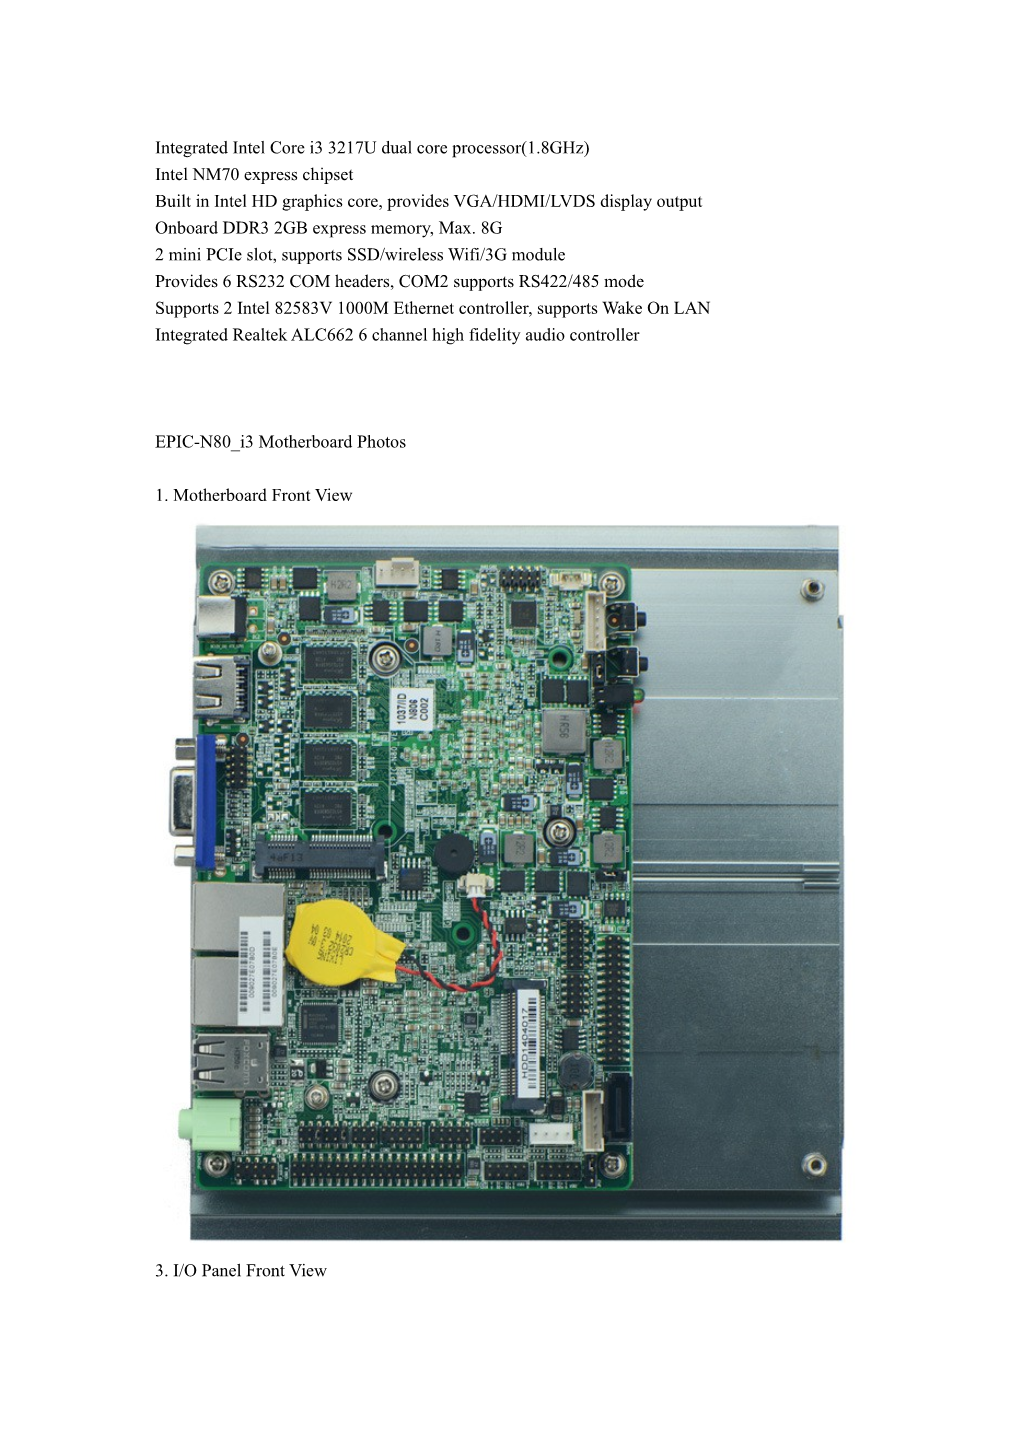 Integrated Intel Core I3 3217U Dual Core Processor(1.8Ghz)